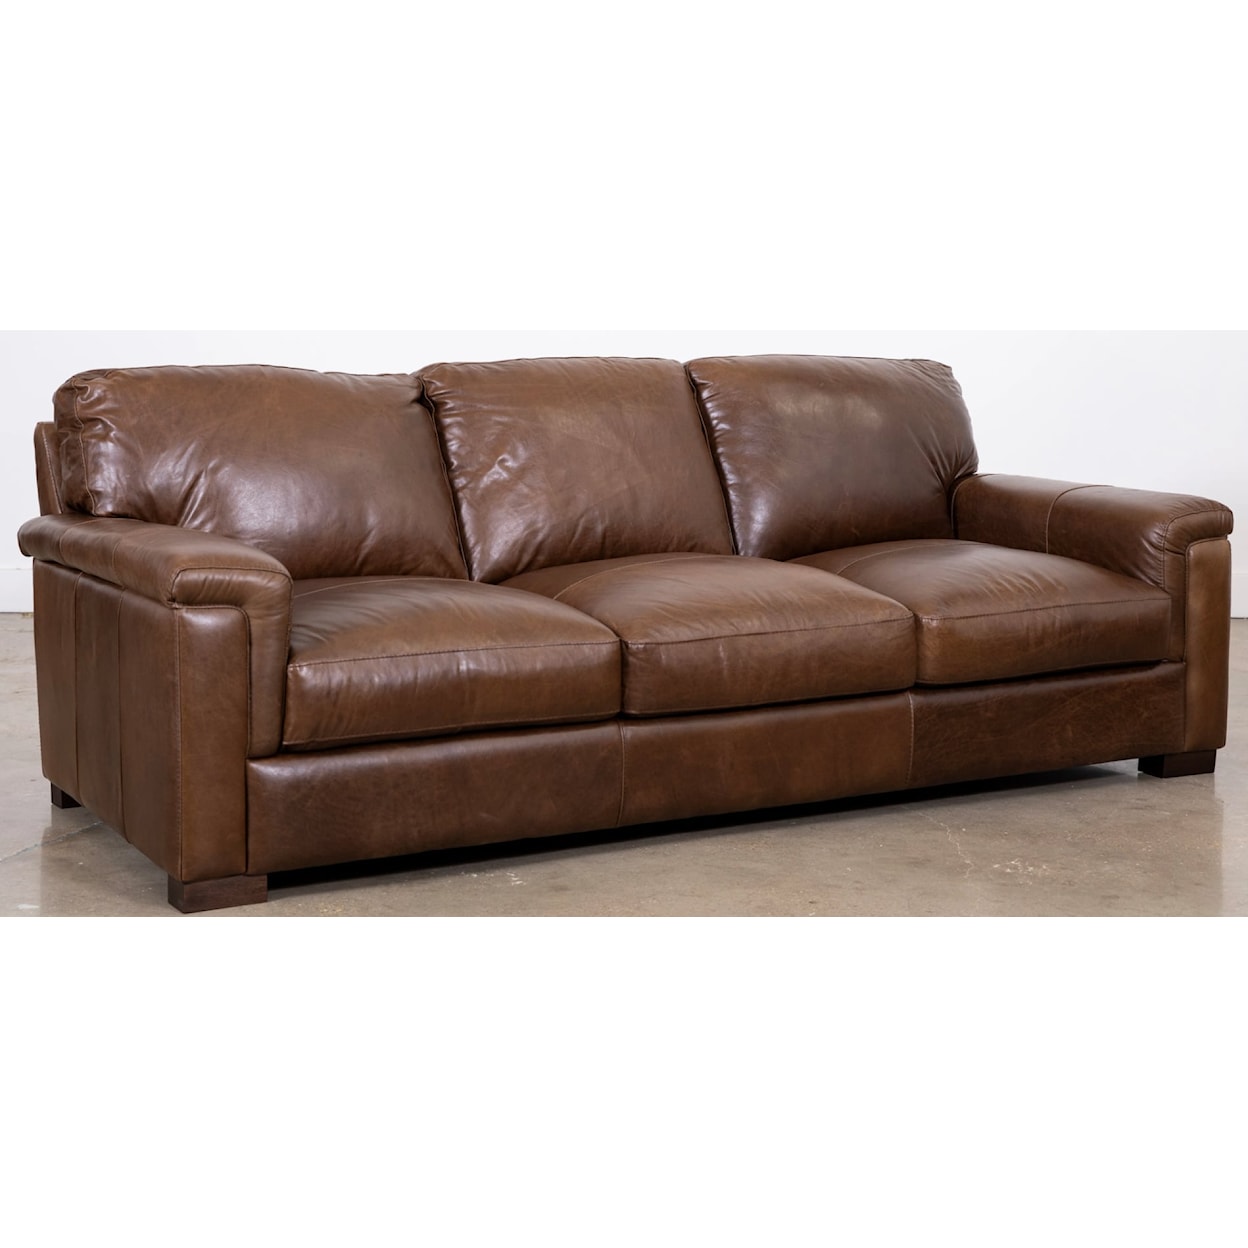 Virginia Furniture Market Premium Leather Florence Sleeper Sofa